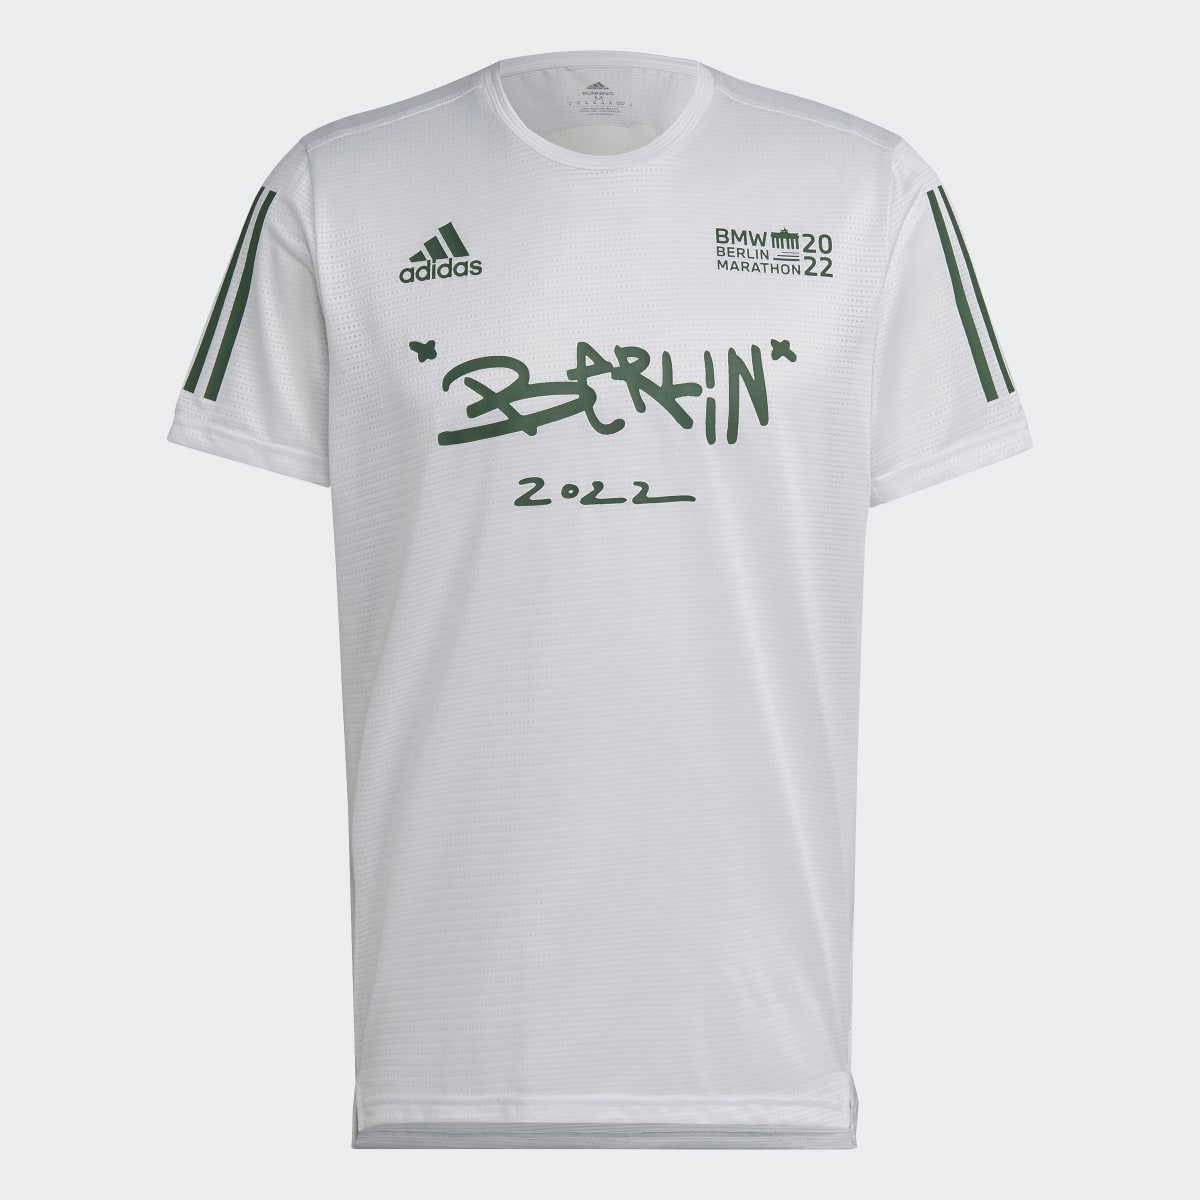 Adidas T-shirt Berlin Marathon 2022. 5